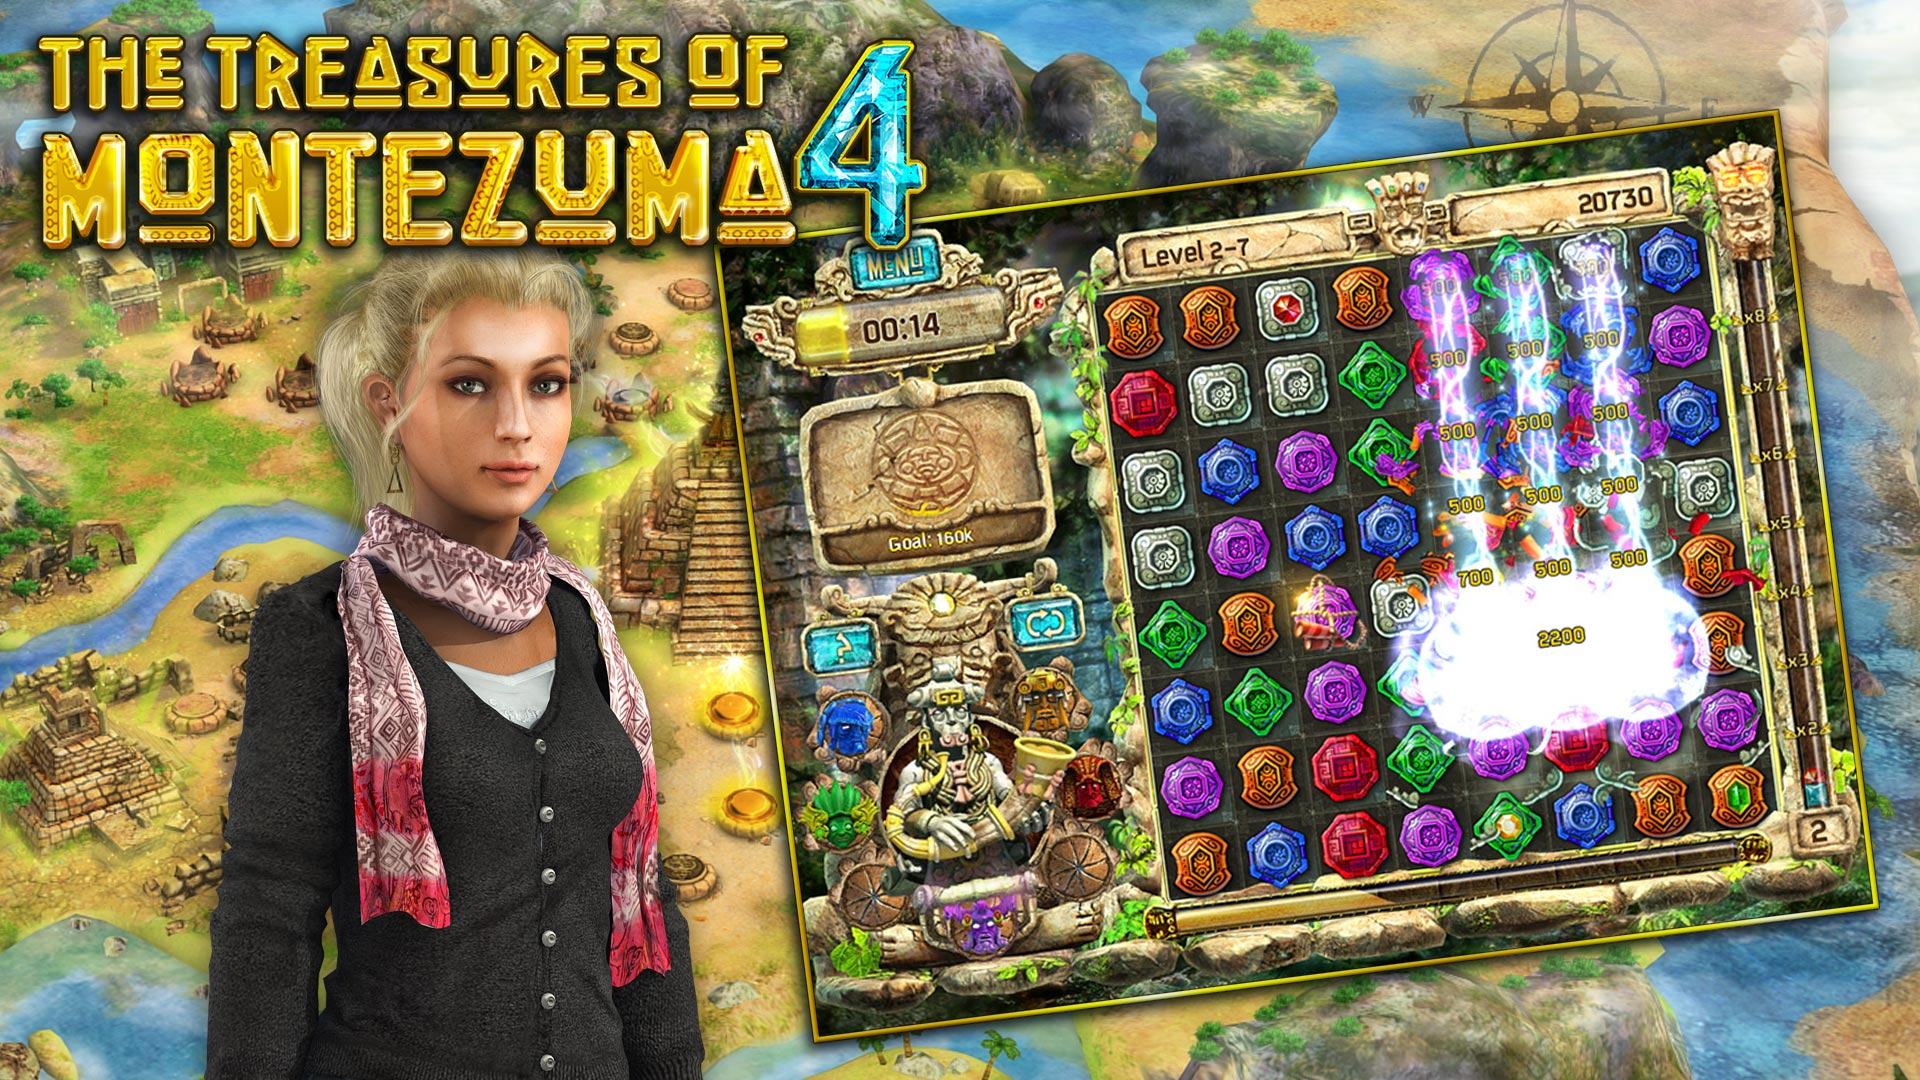 The Treasures of Montezuma 3 download the last version for mac